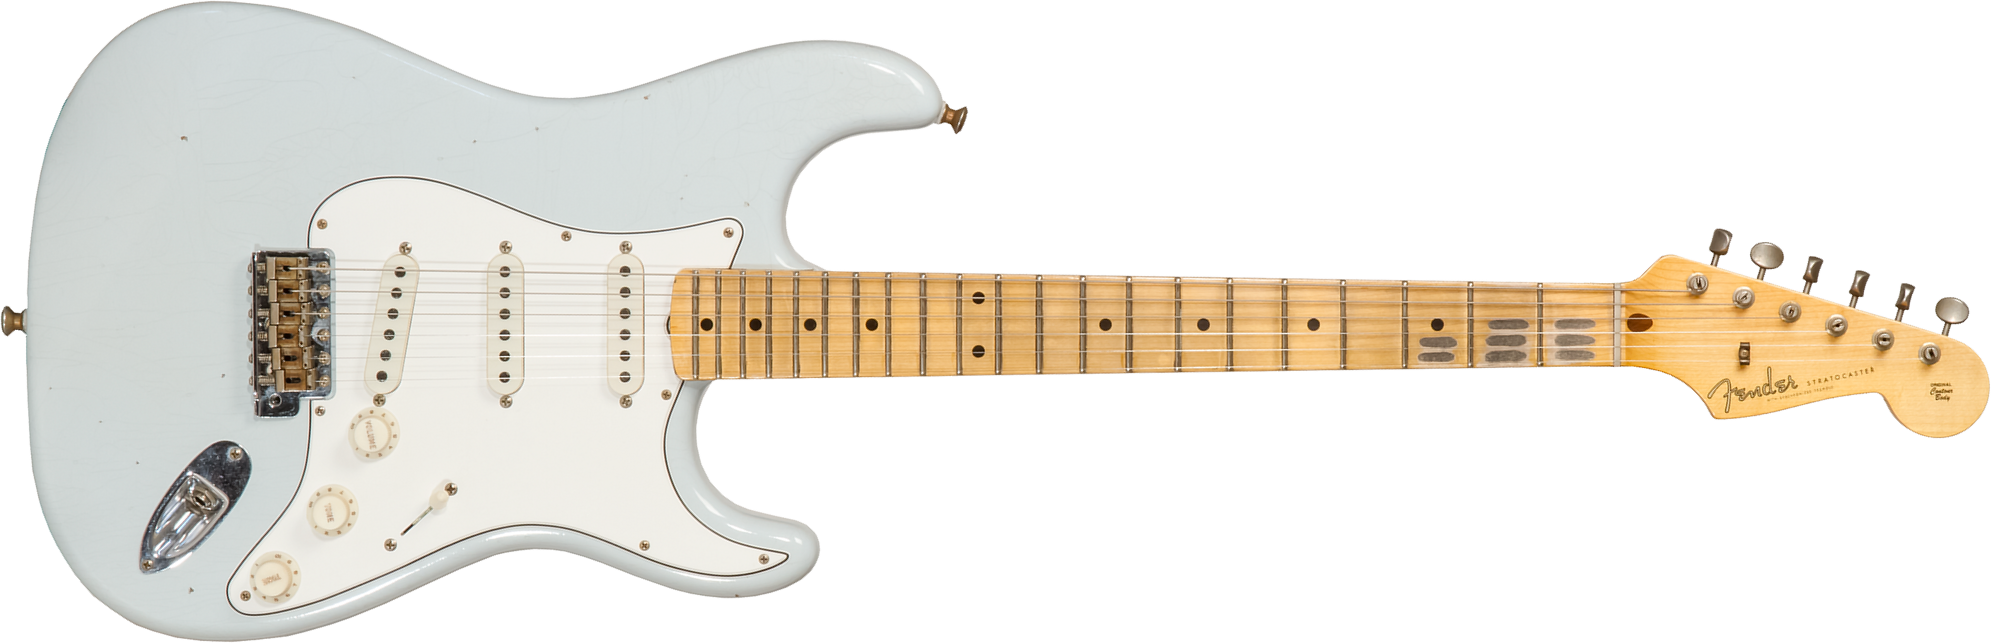 Fender Custom Shop Strat Tomatillo Special 3s Trem Mn #cz571194 - Journeyman Relic Aged Sonic Blue - E-Gitarre in Str-Form - Main picture